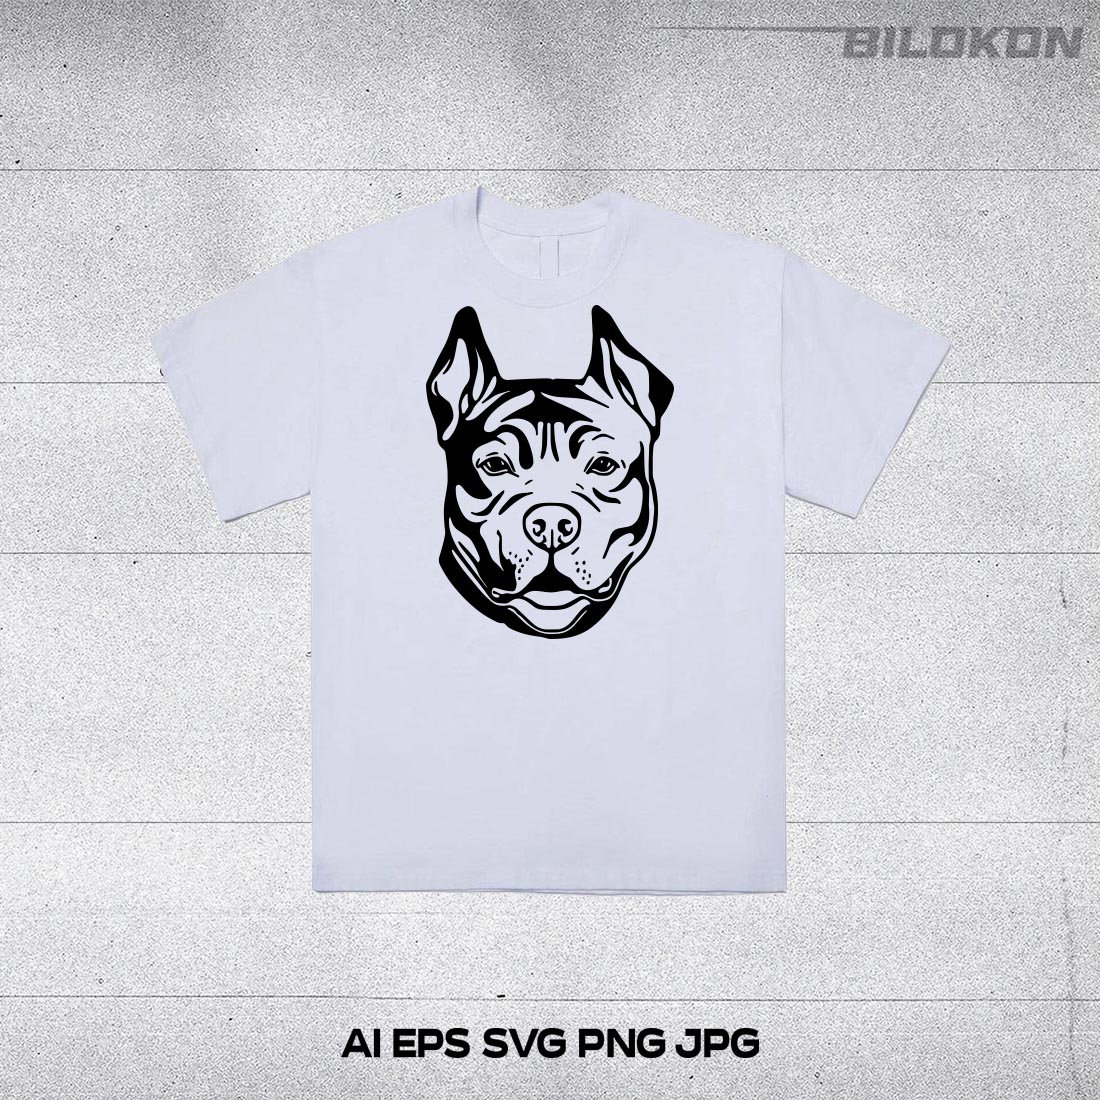 Pitbull dog face, SVG, Vector, Illustration preview image.